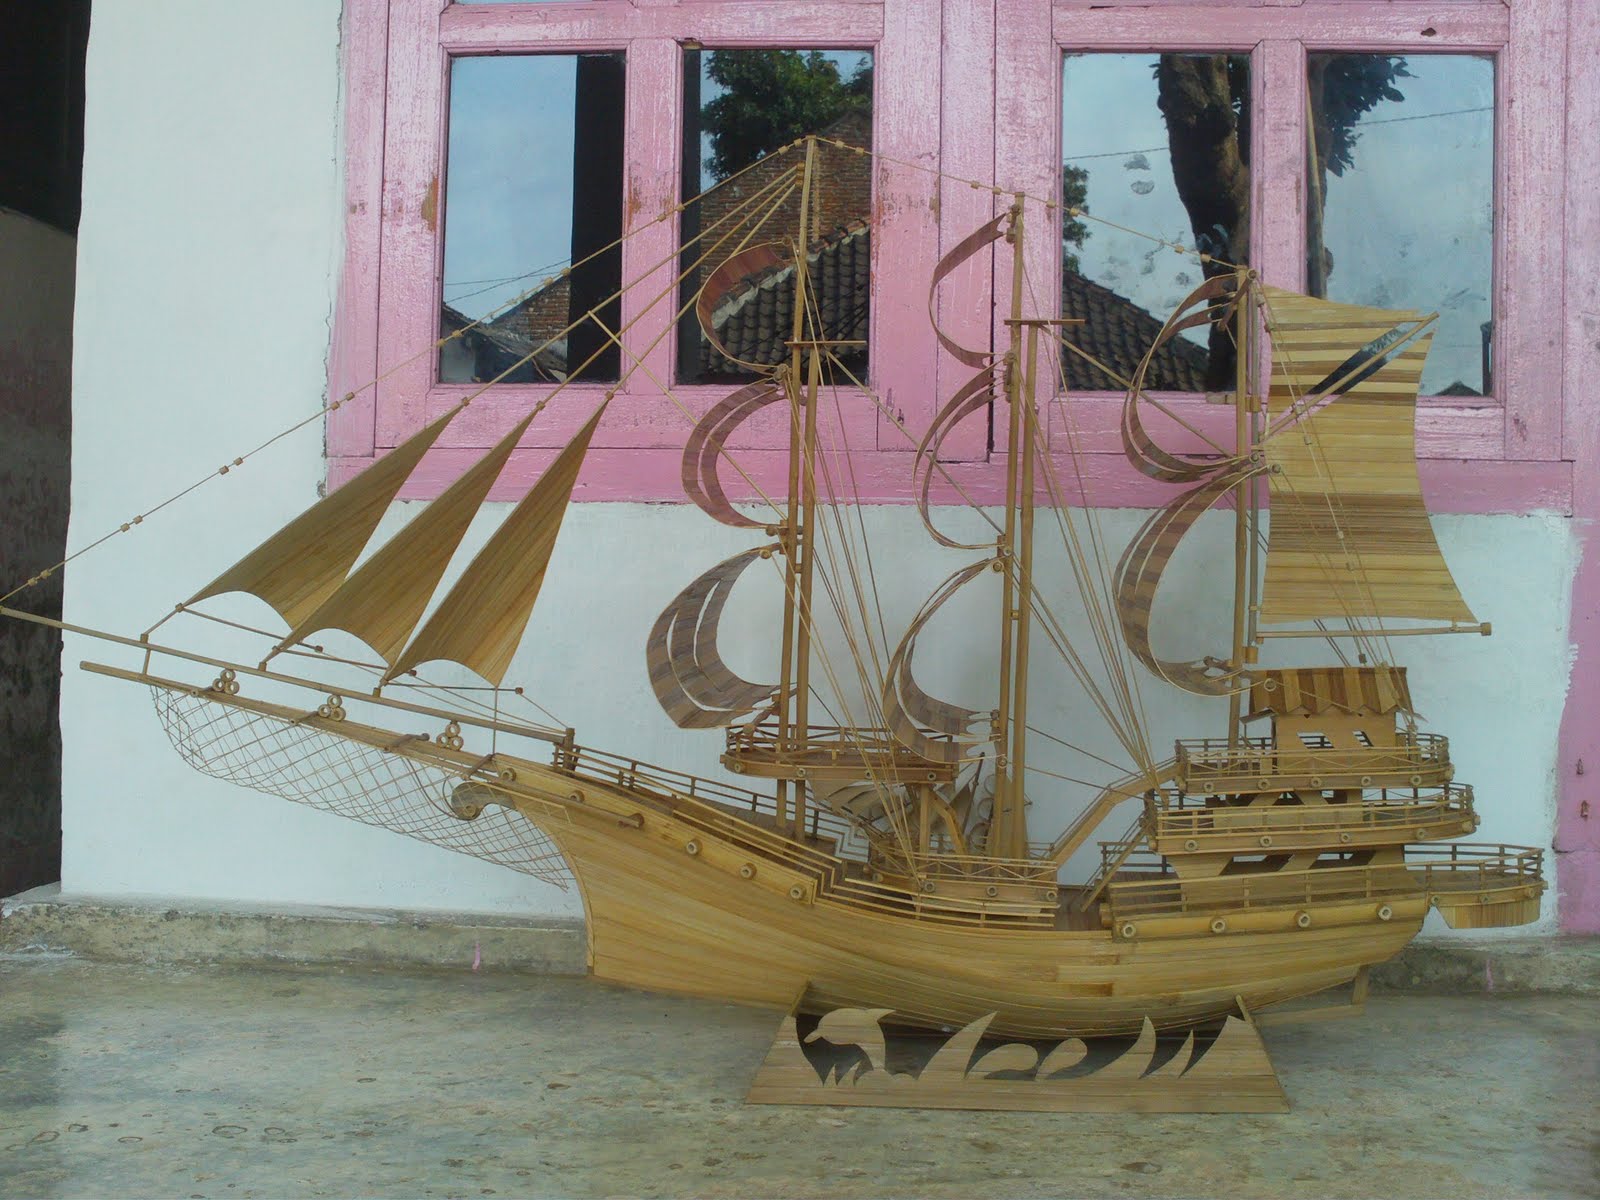  Miniatur  Kapal Laut Dari Bambu  infotiket com